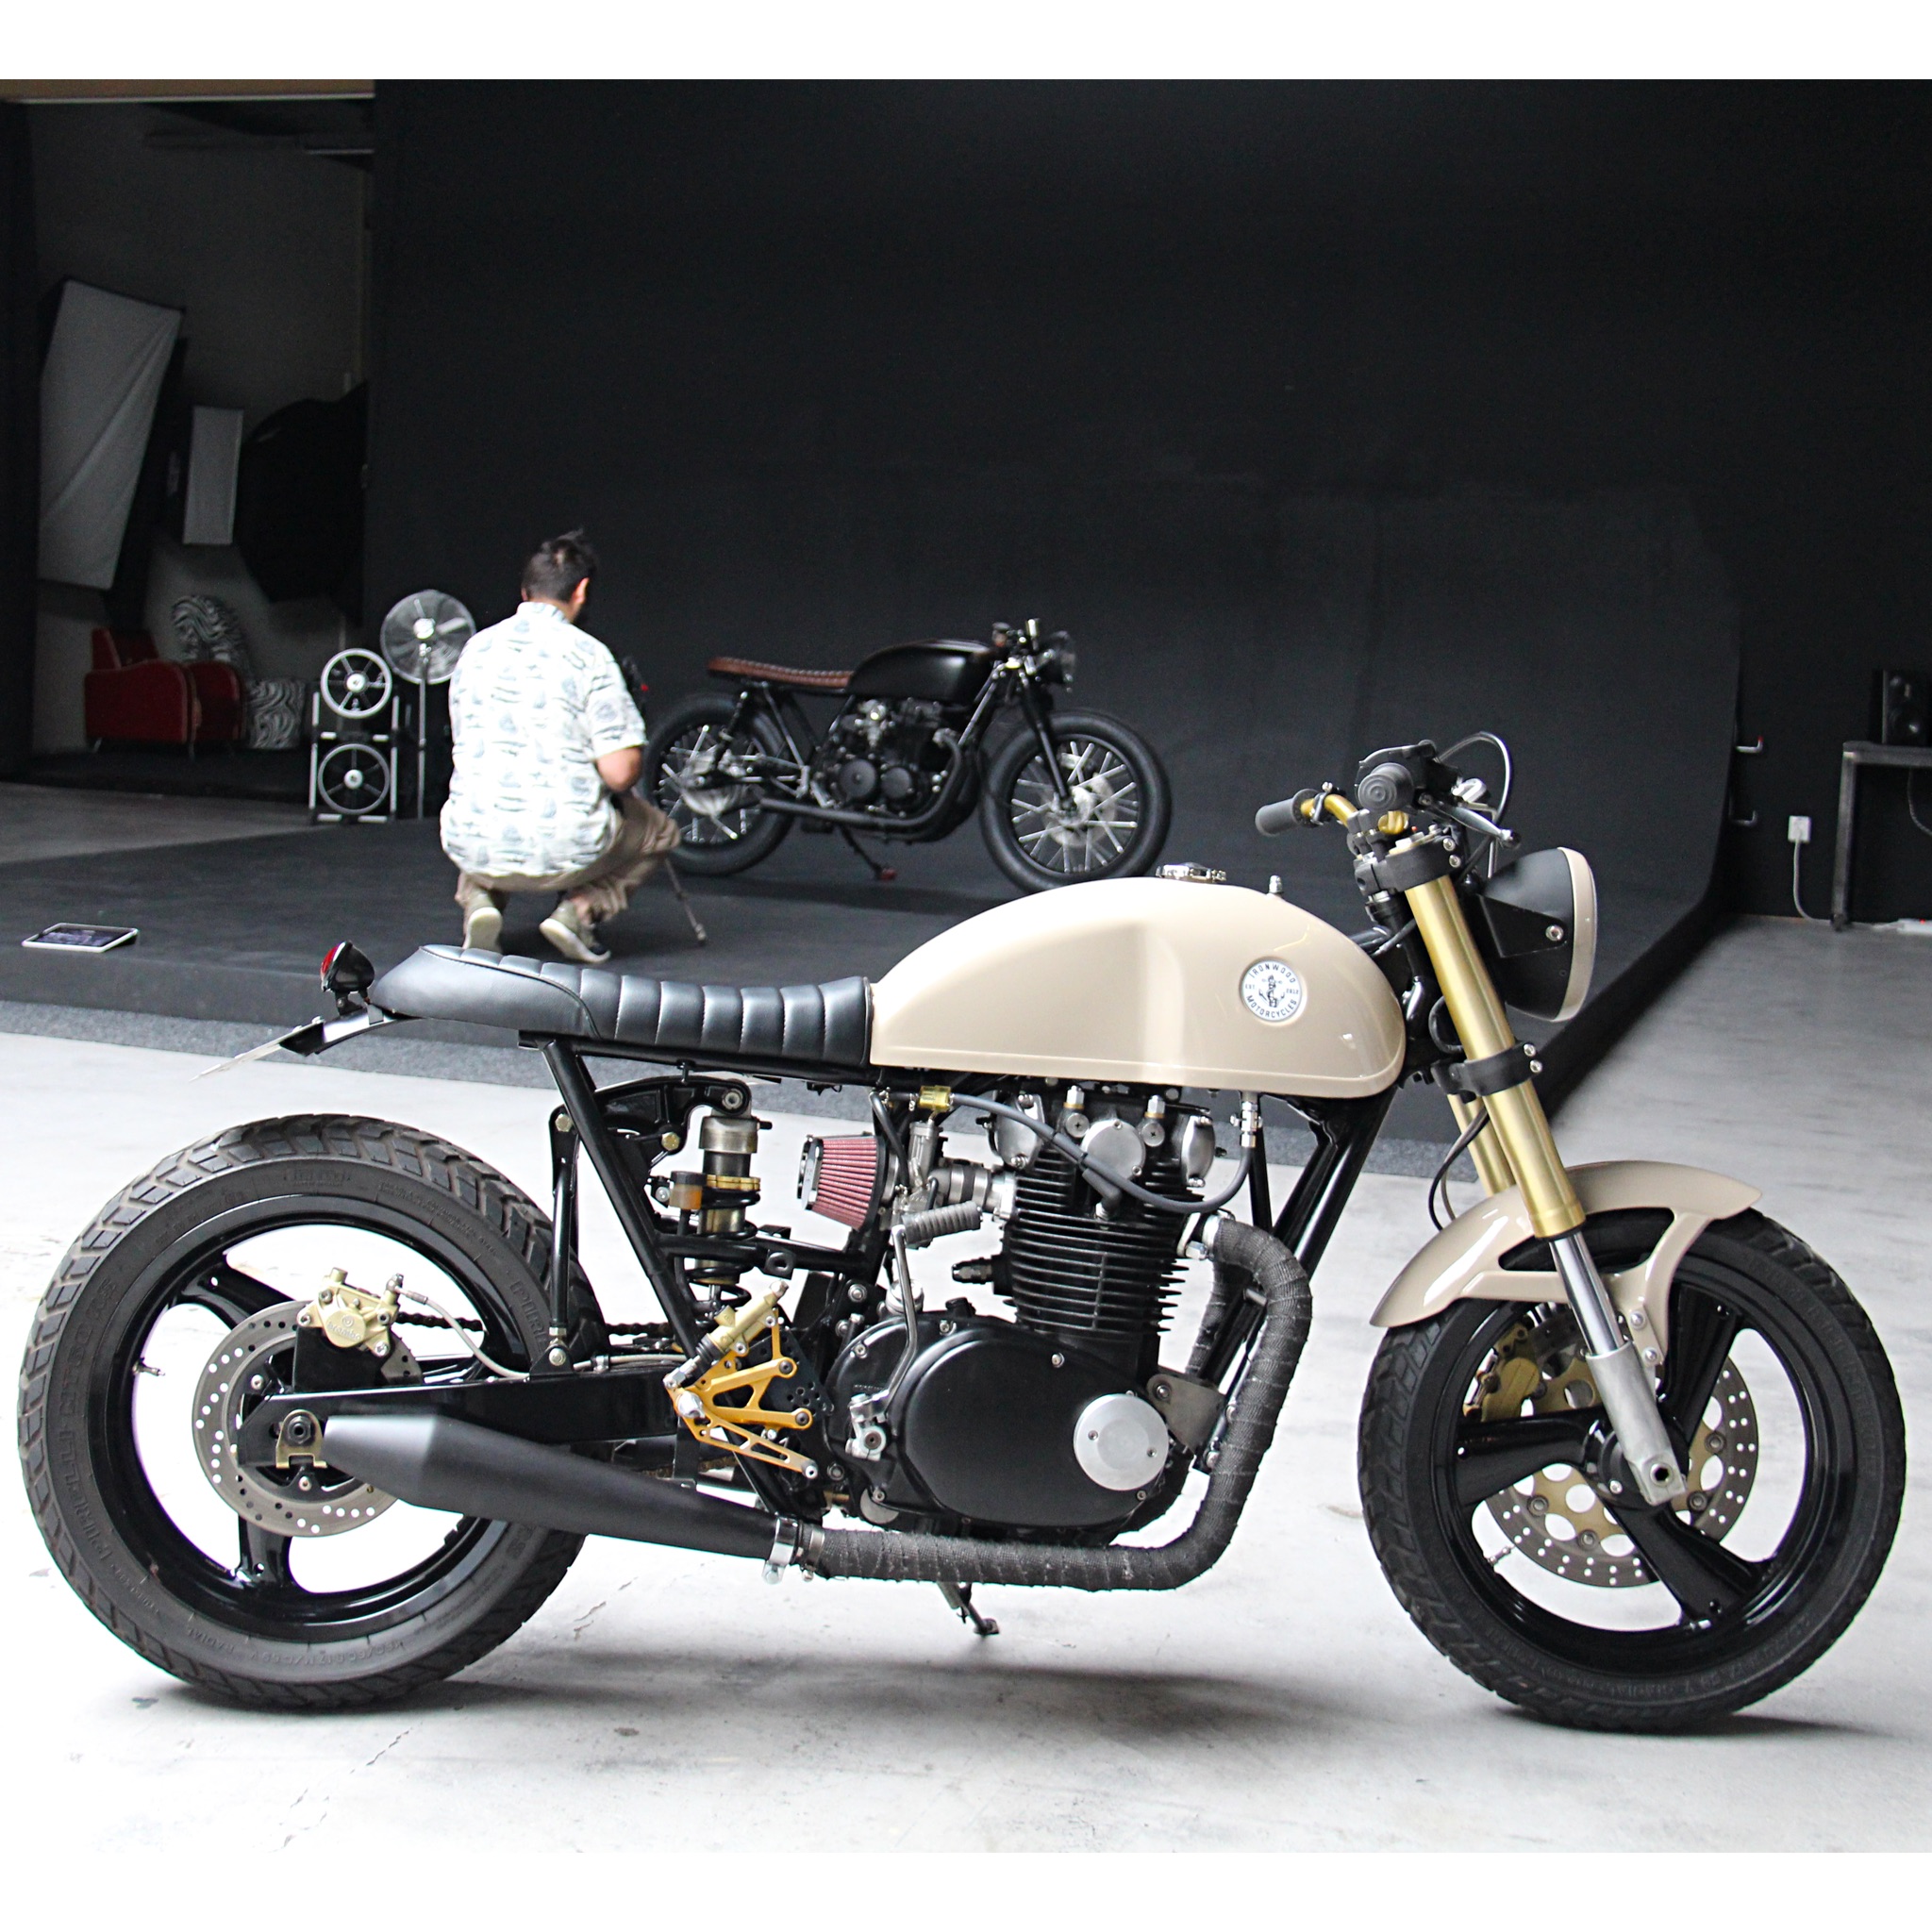 Yamaha XS650 Scrambler by Ironwood Motorcycles – BikeBound